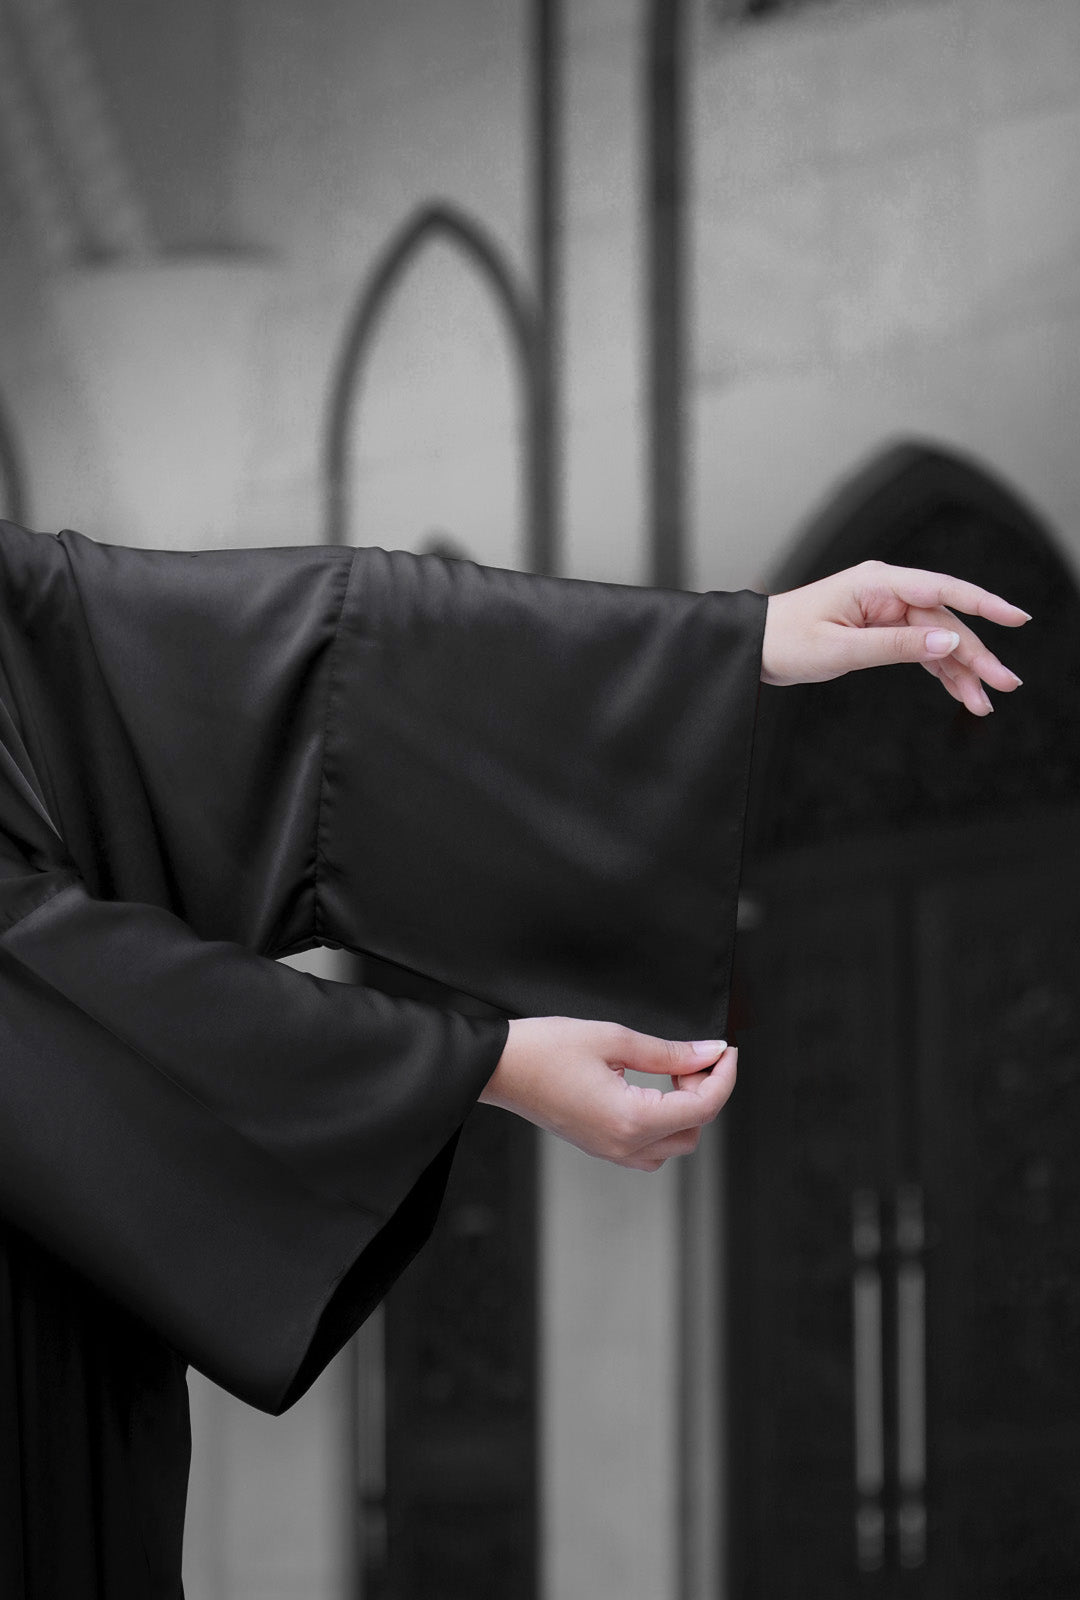 Abaya Inaya in Black Beauty